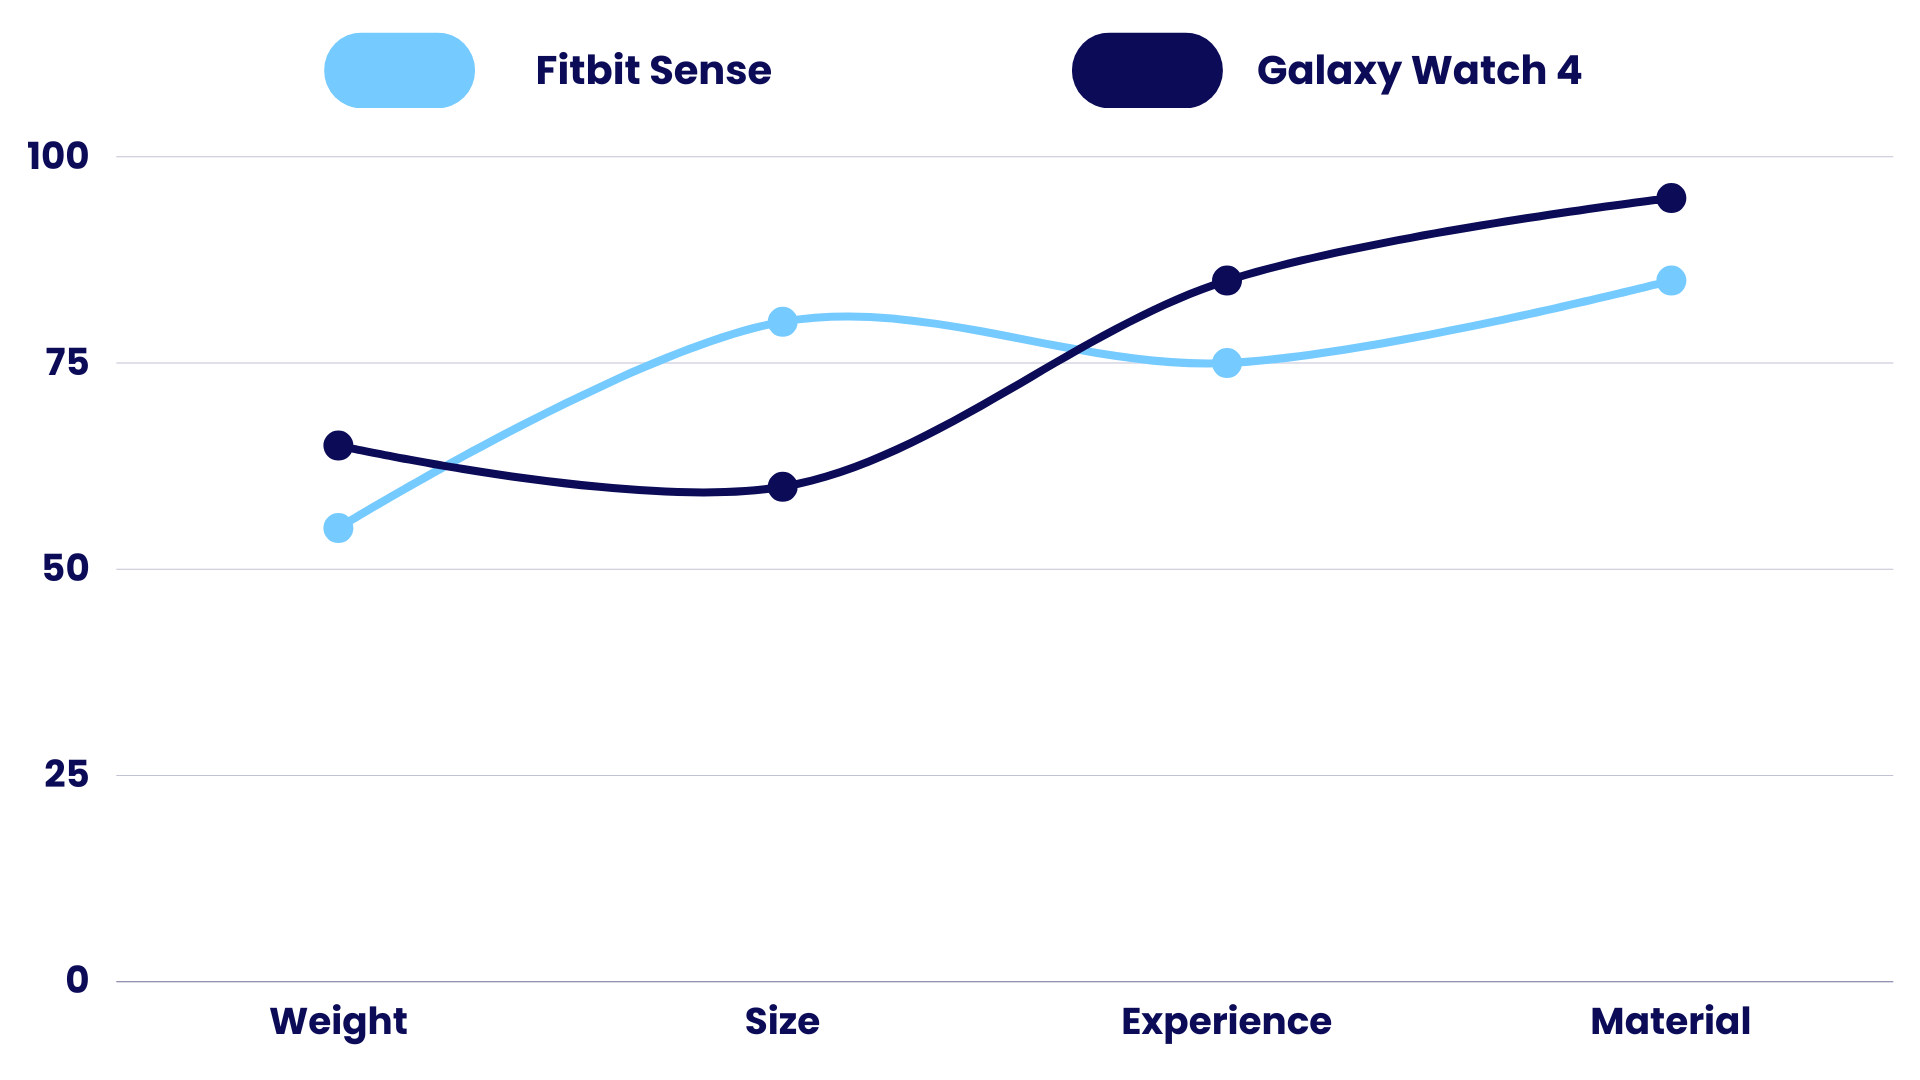 Body Comparison of Fitbit Sense vs Galaxy Watch 4